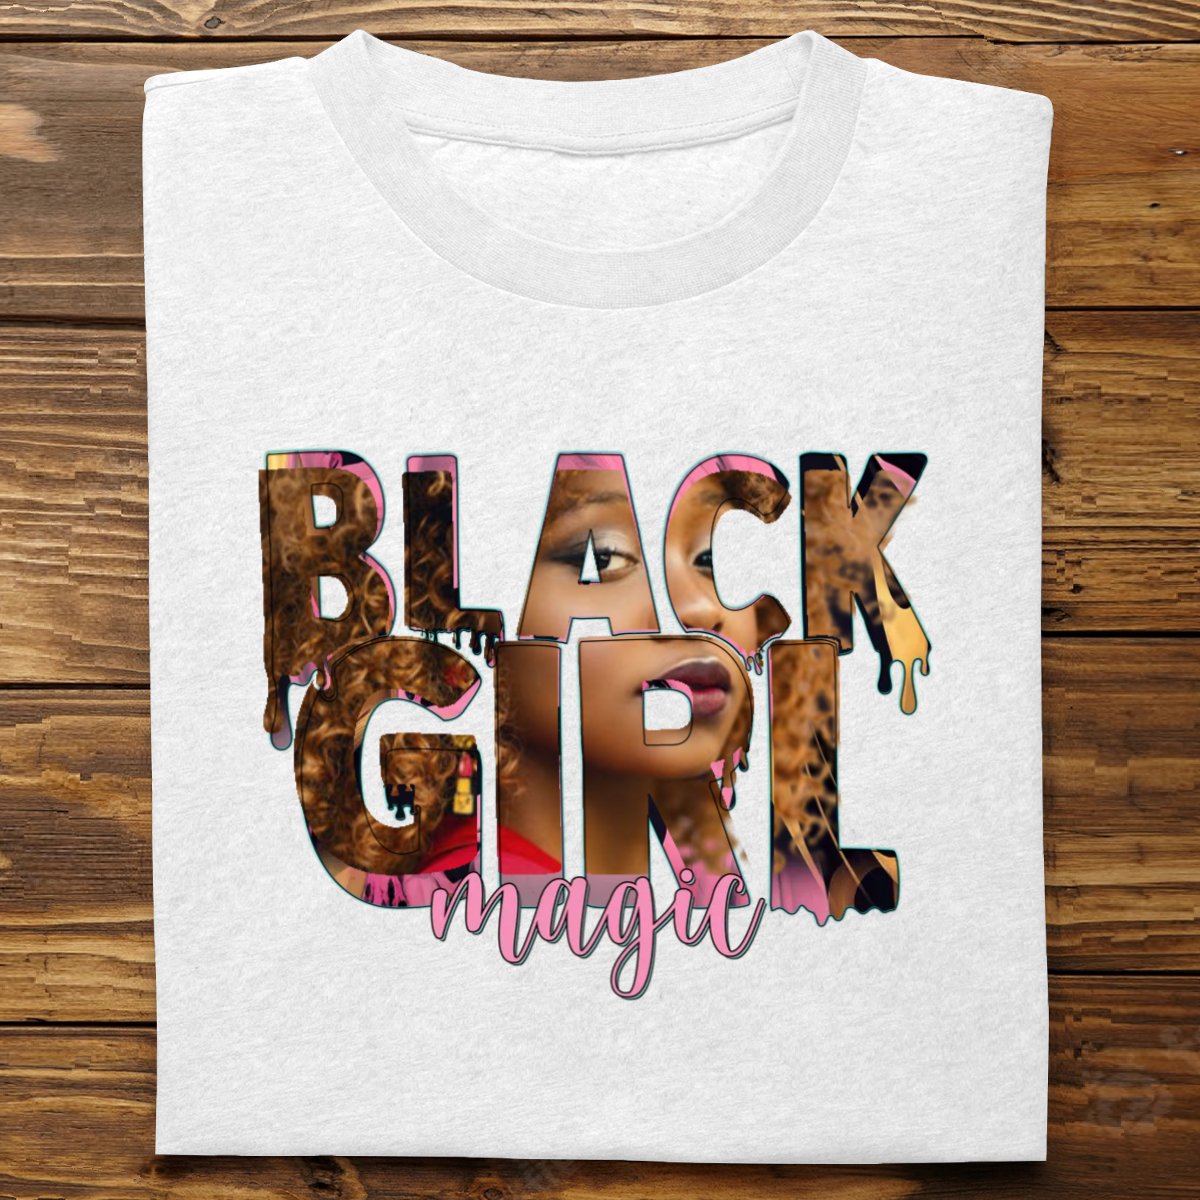 Friends - Black Girl Magic - Personalized T - shirt (LH) - The Next Custom Gift